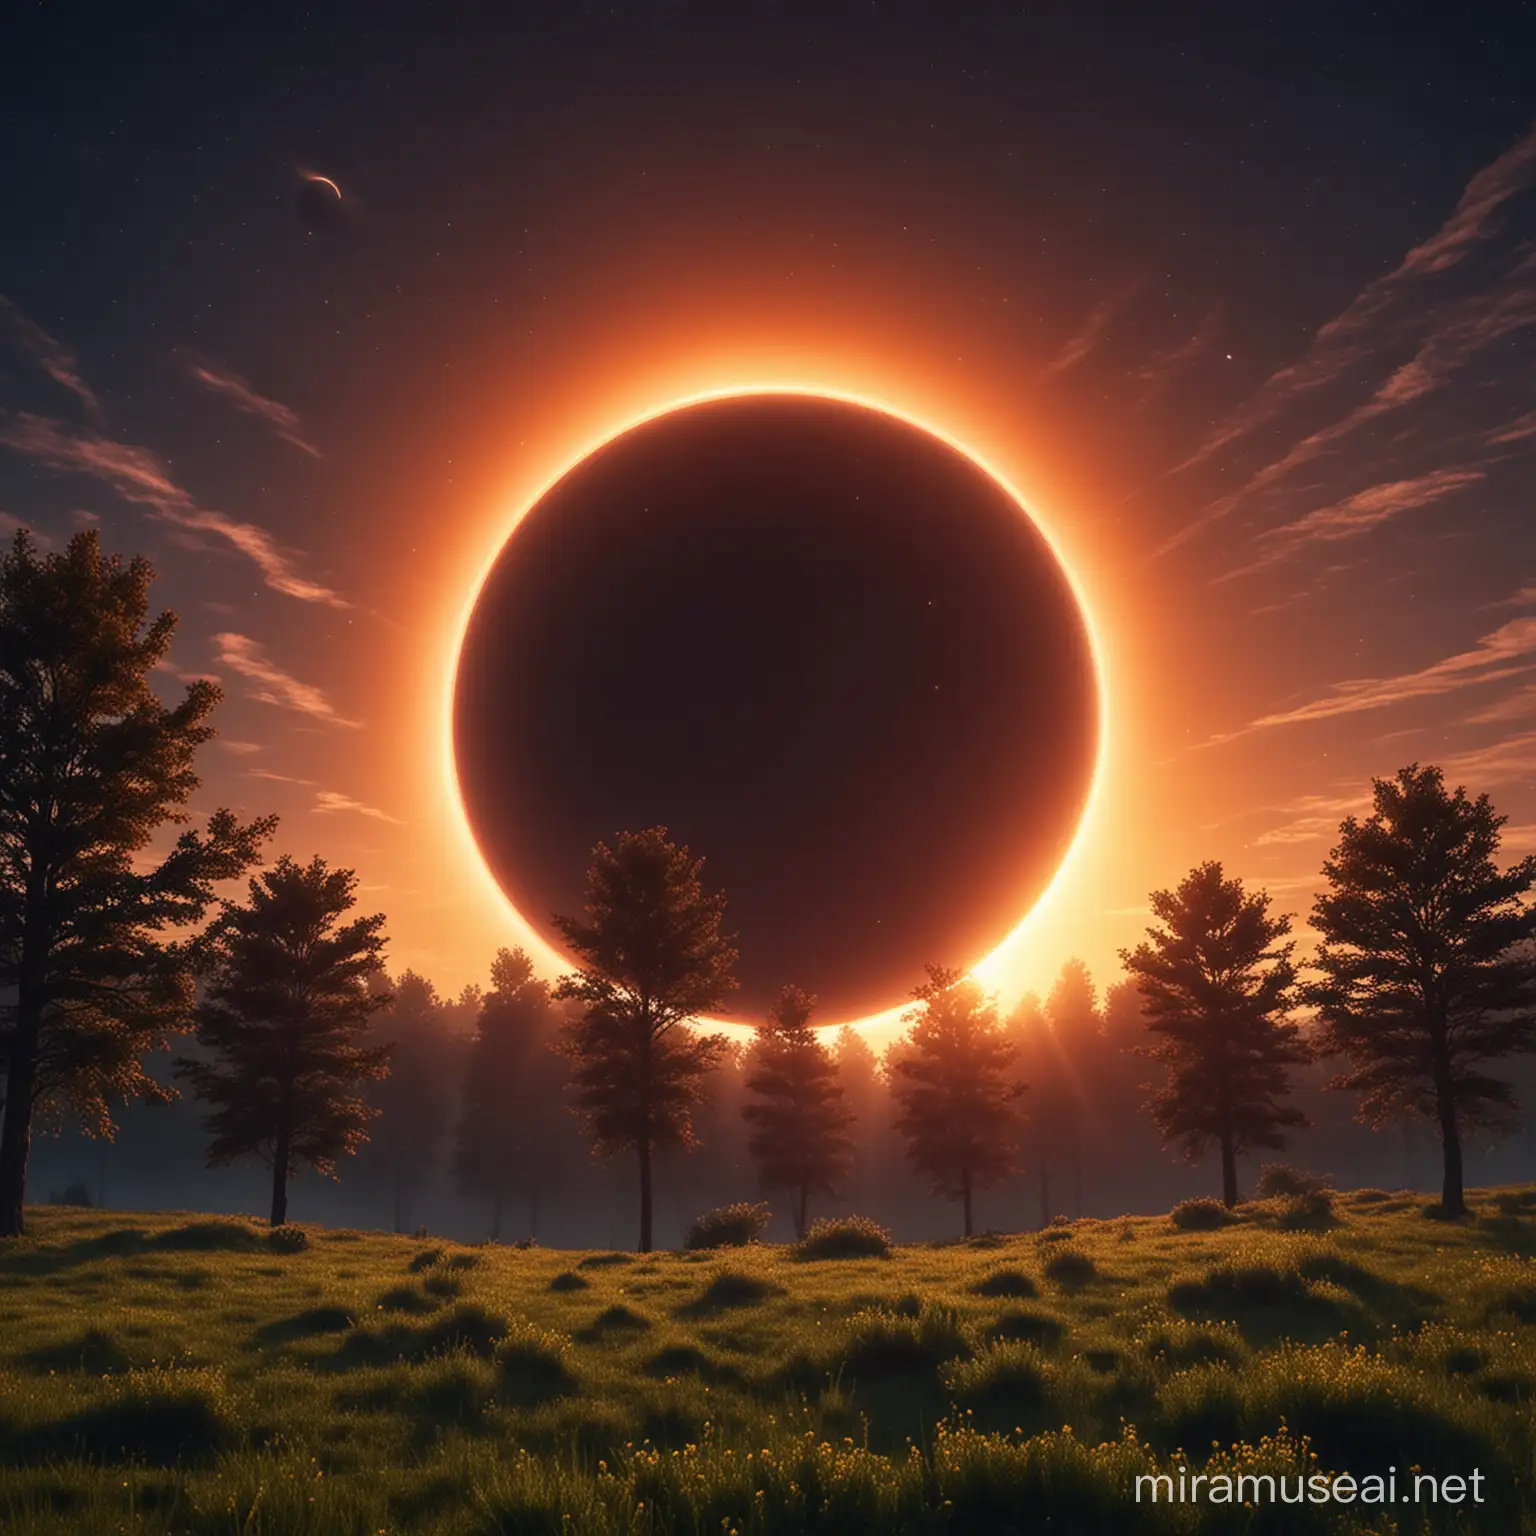 Spectacular Solar Eclipse Illuminating Serene Natural Landscape